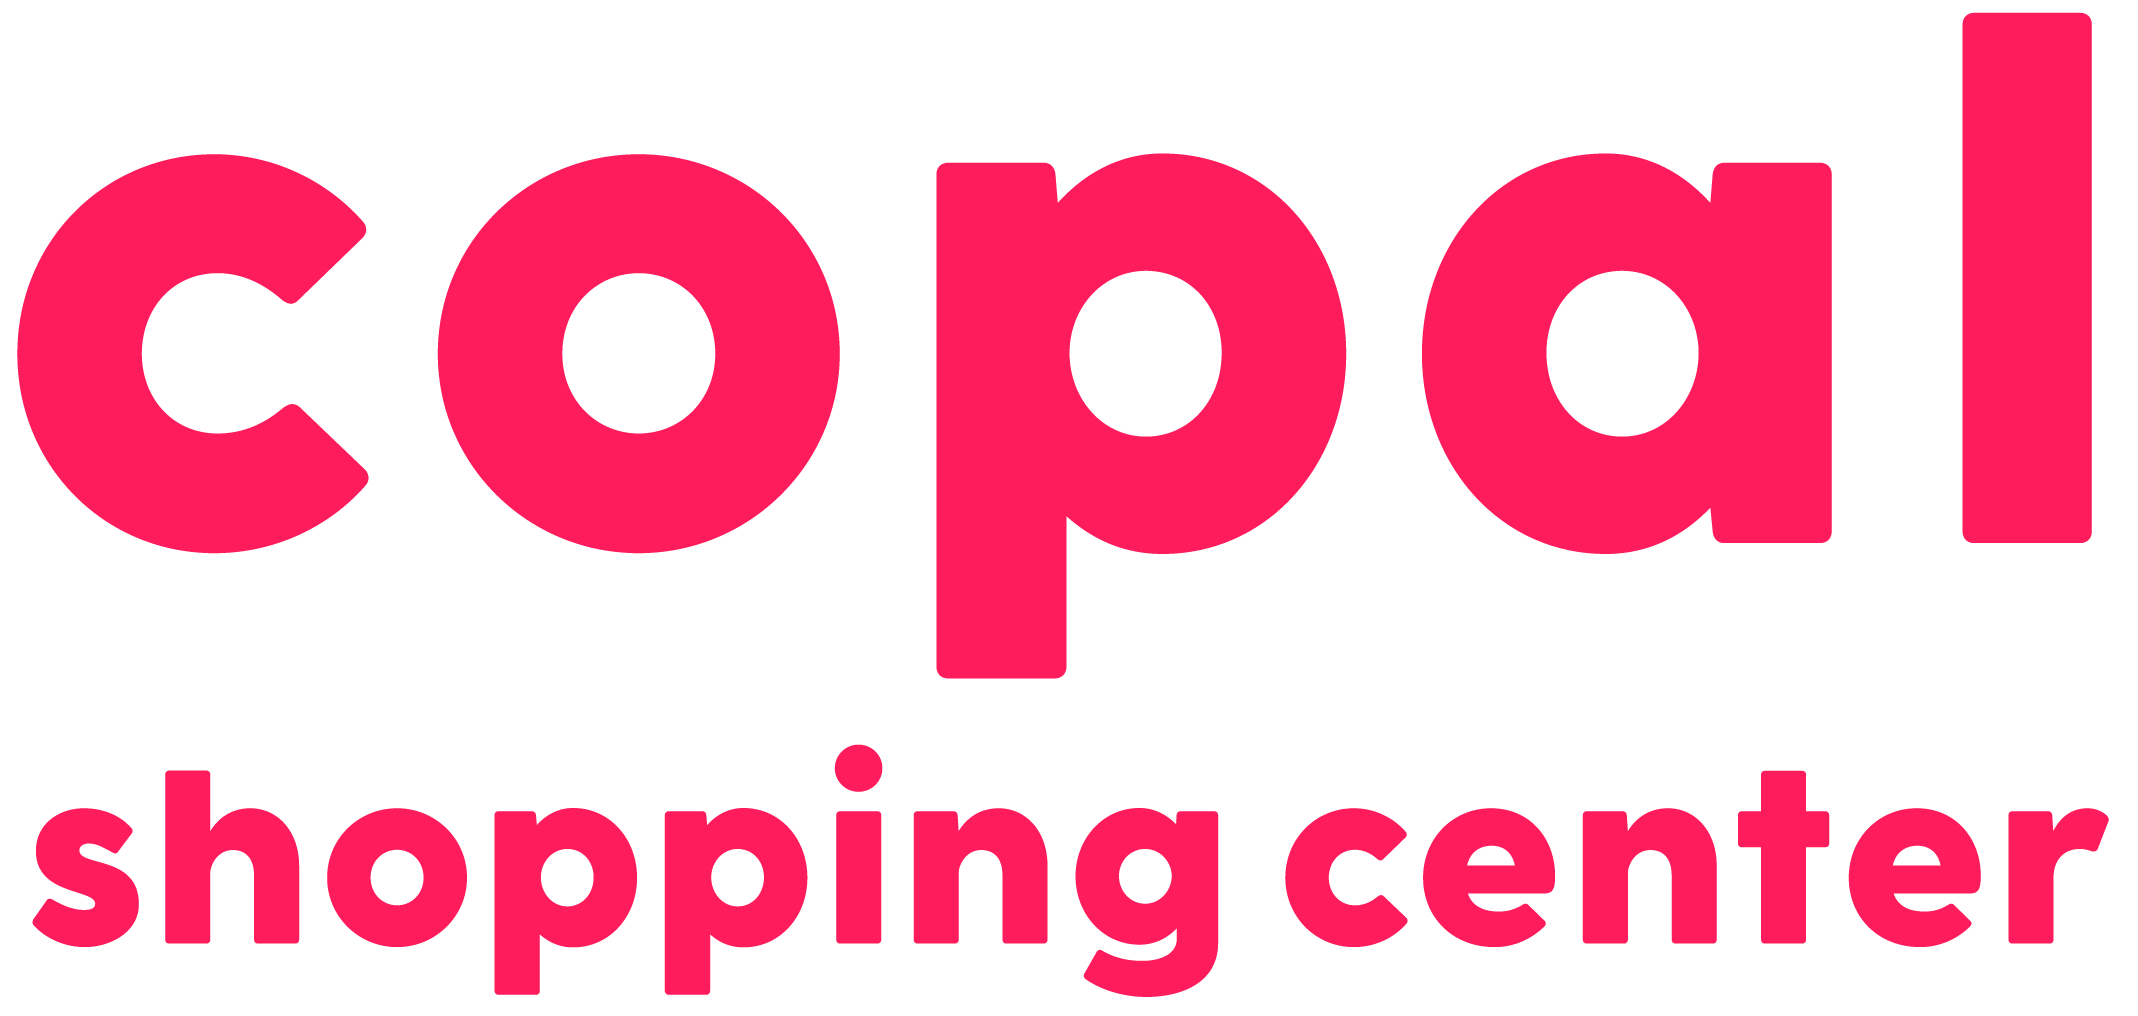 Copal shopping center